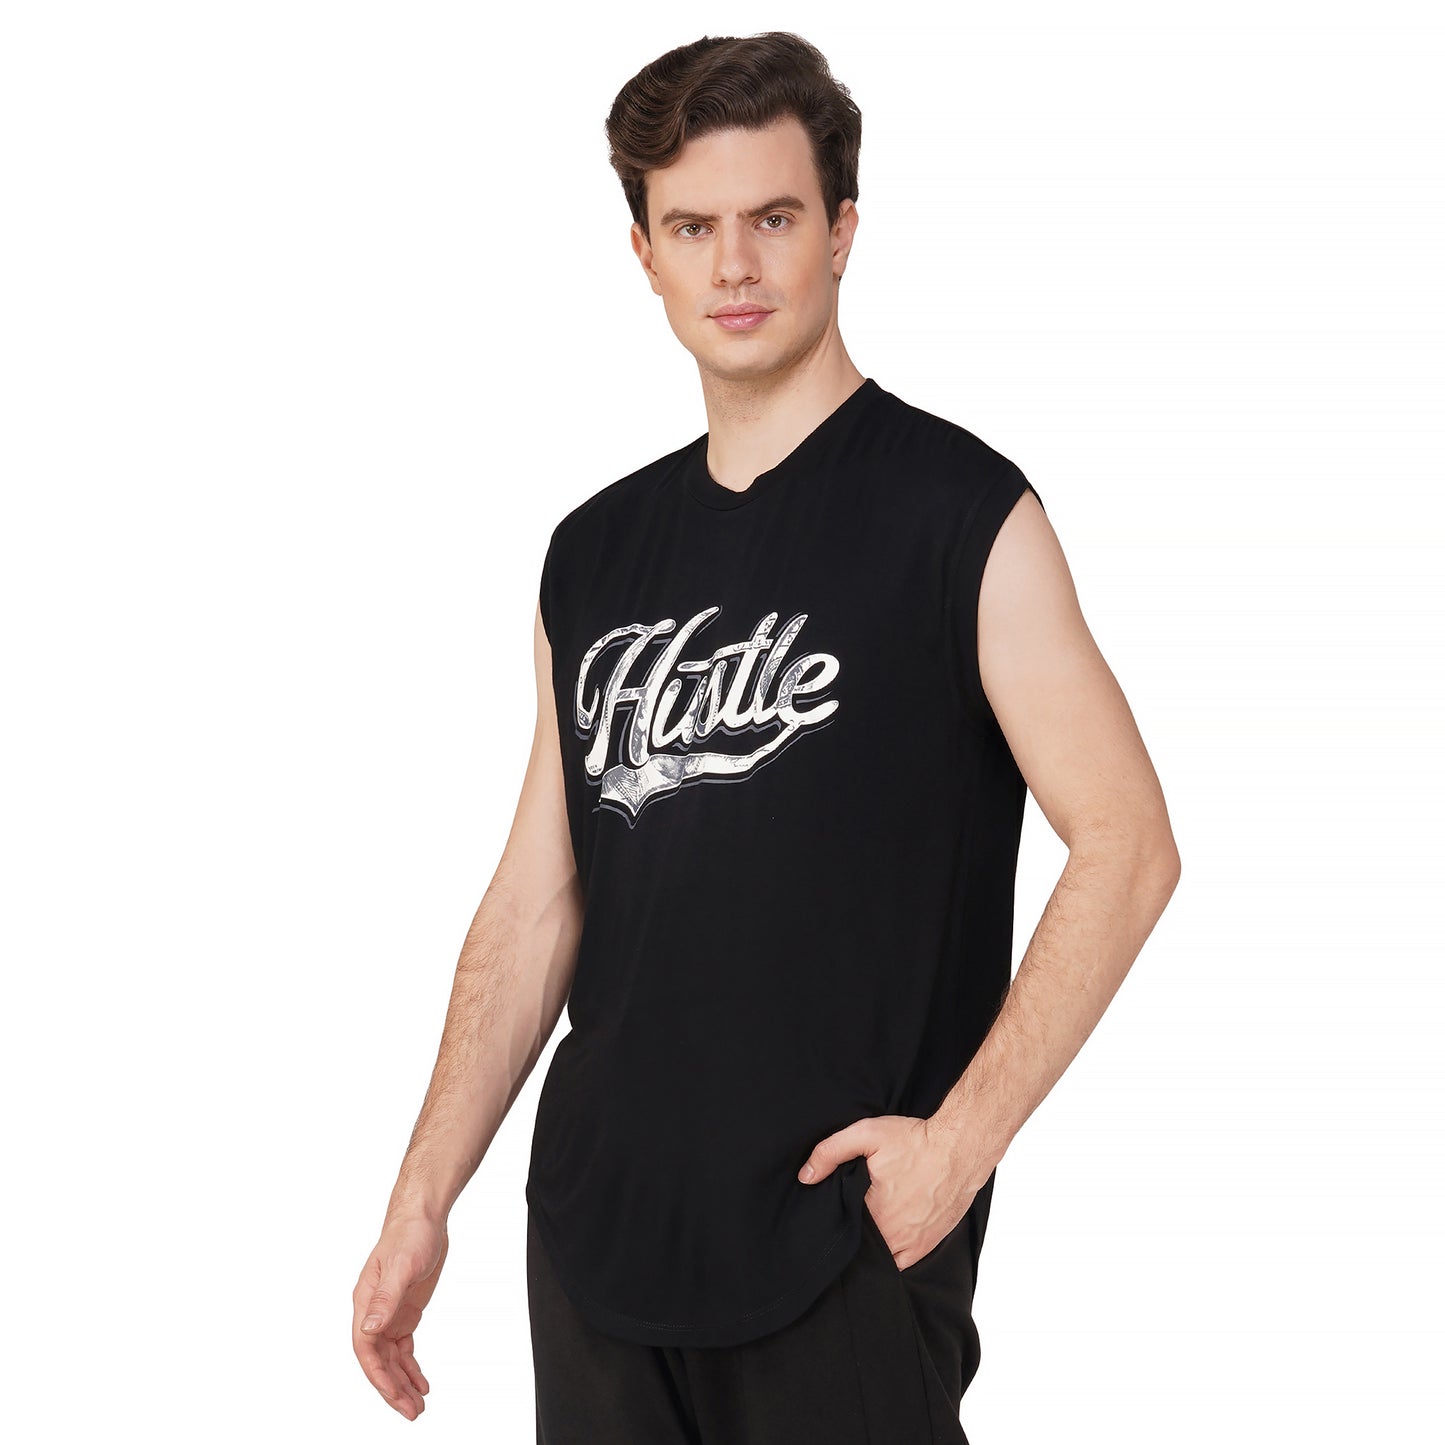 SLAY. Men's Hustle Printed Sleeveless Black Dropcut T-Shirt